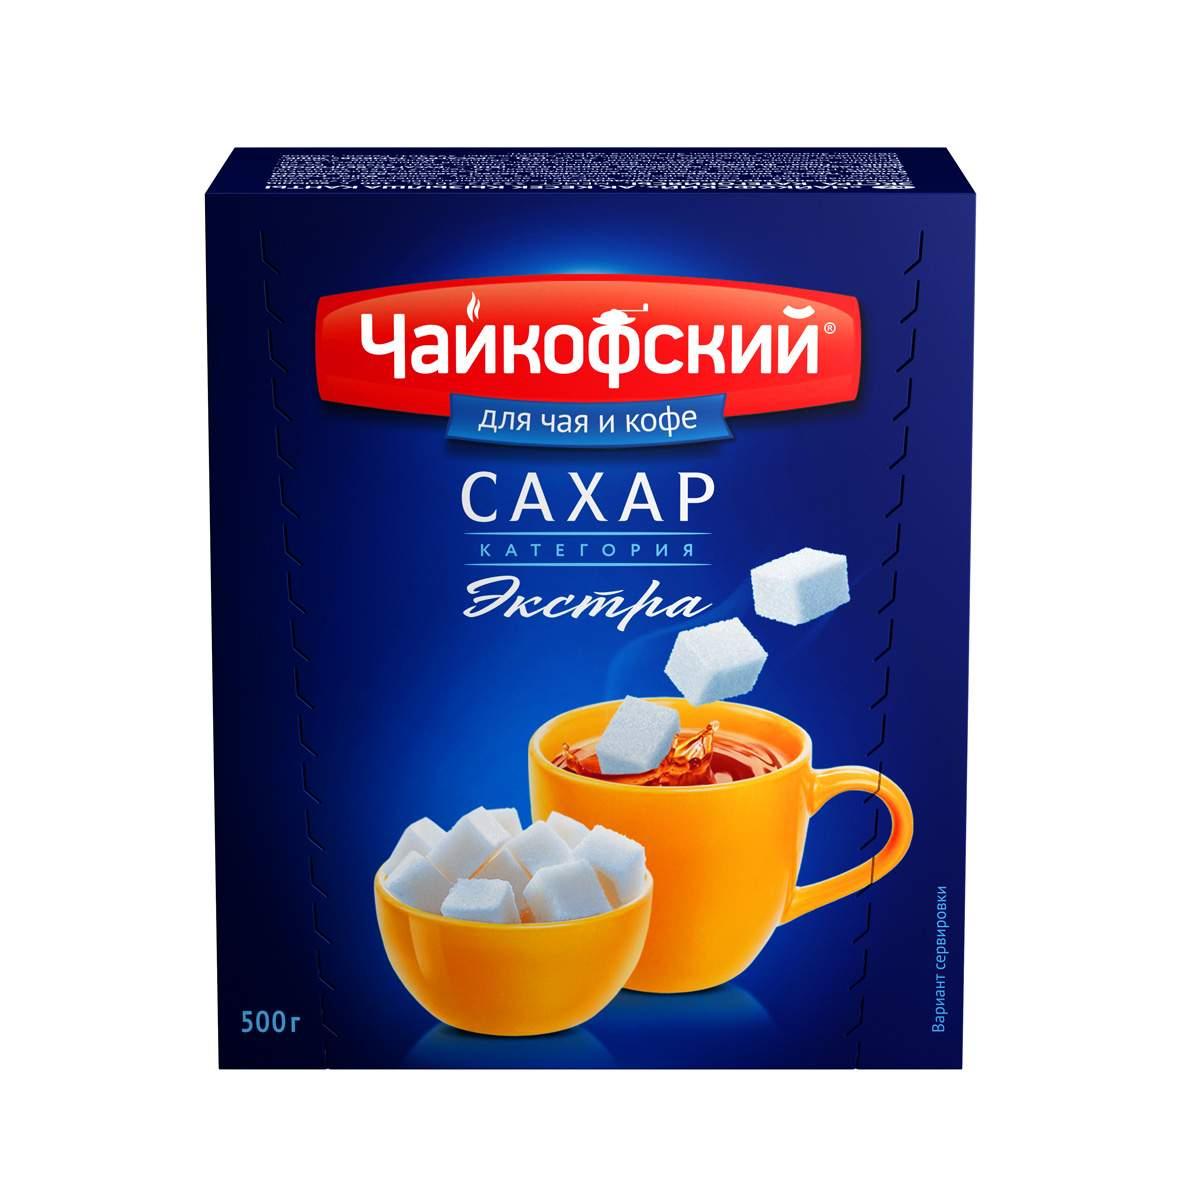 Сахар рафинад Чайкофский 500г - интернет-магазин Близнецы